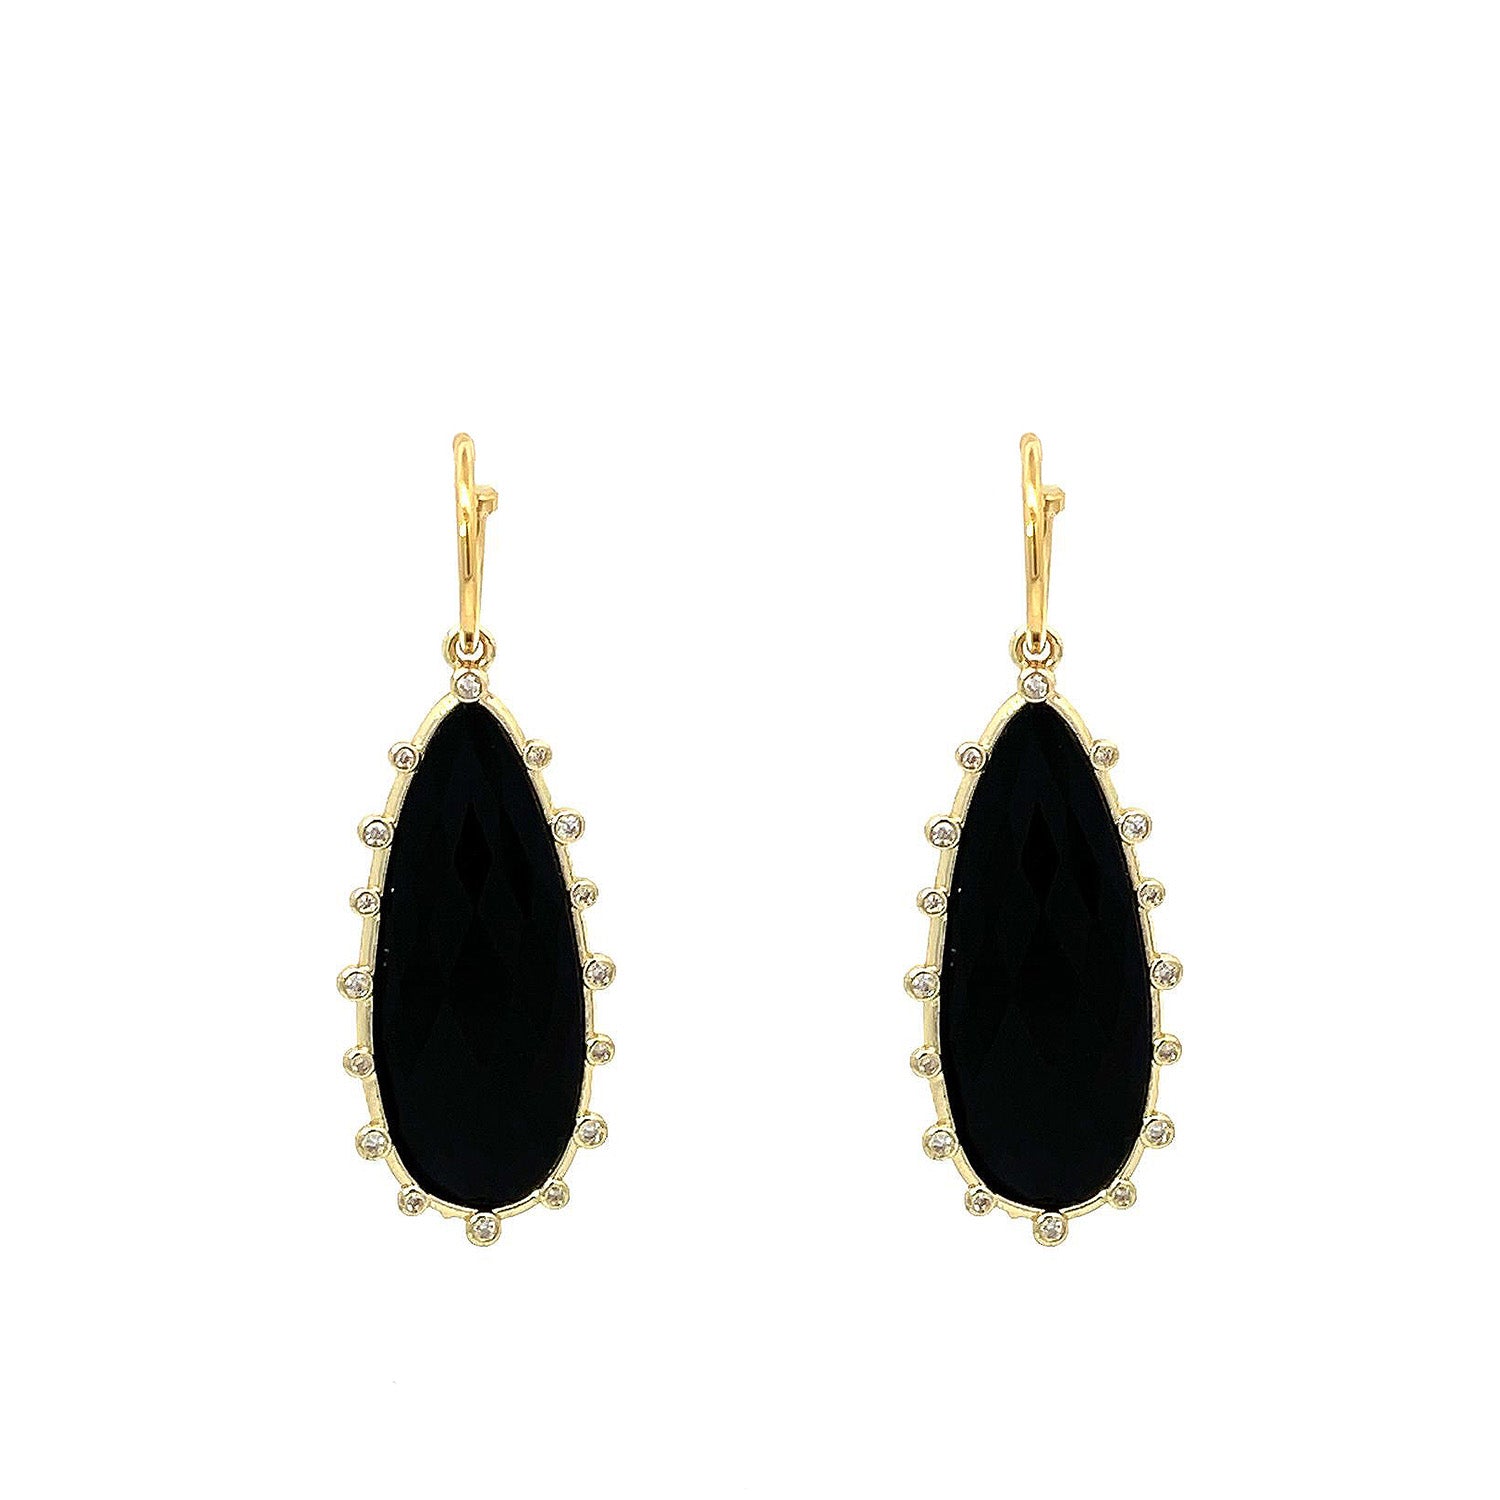 Shop Gosia Orlowska's Black Onyx Drop Earrings